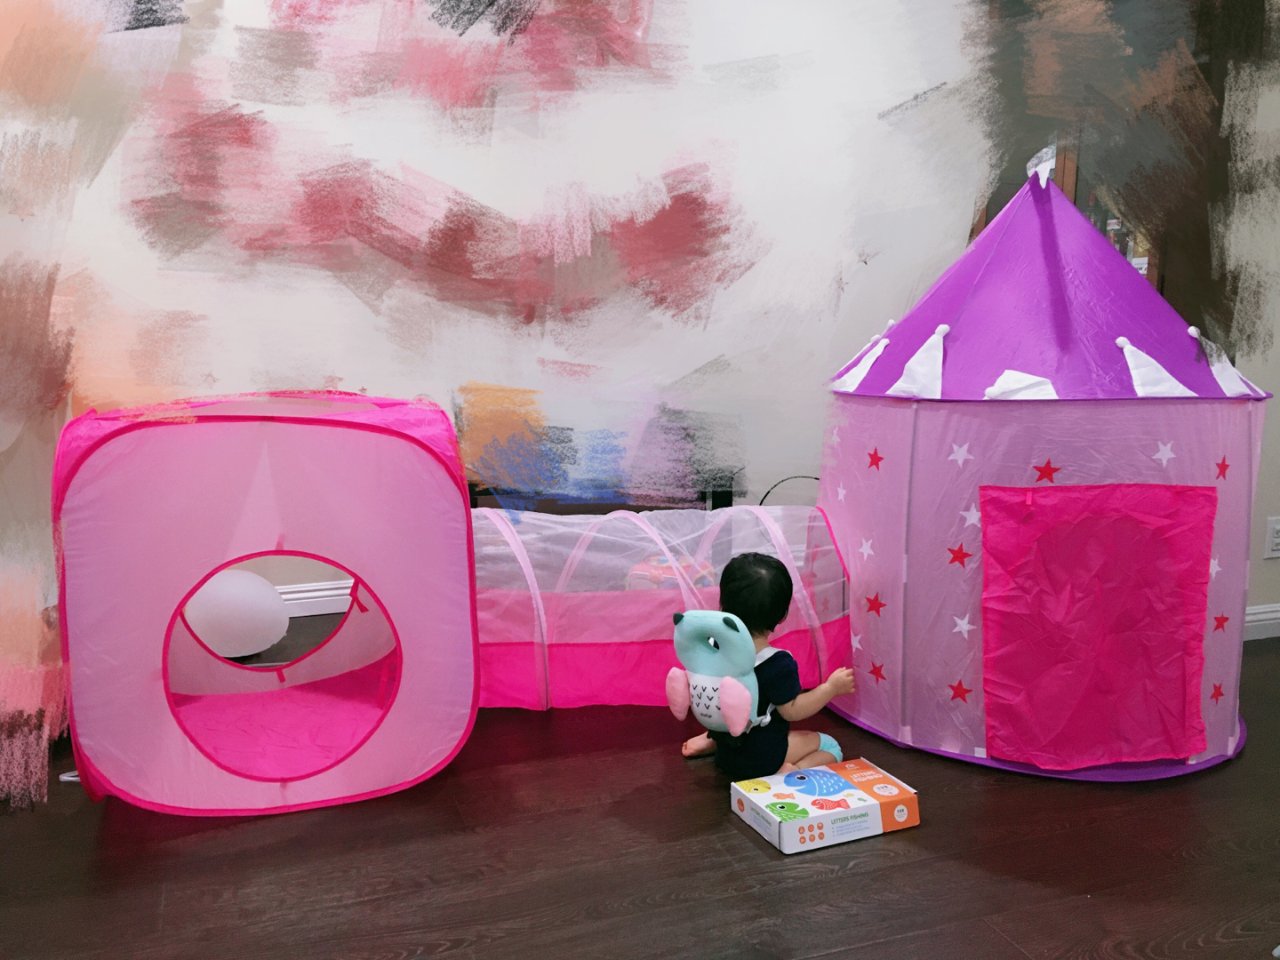 Amazon.com: Gift for Girls, Princess Ten